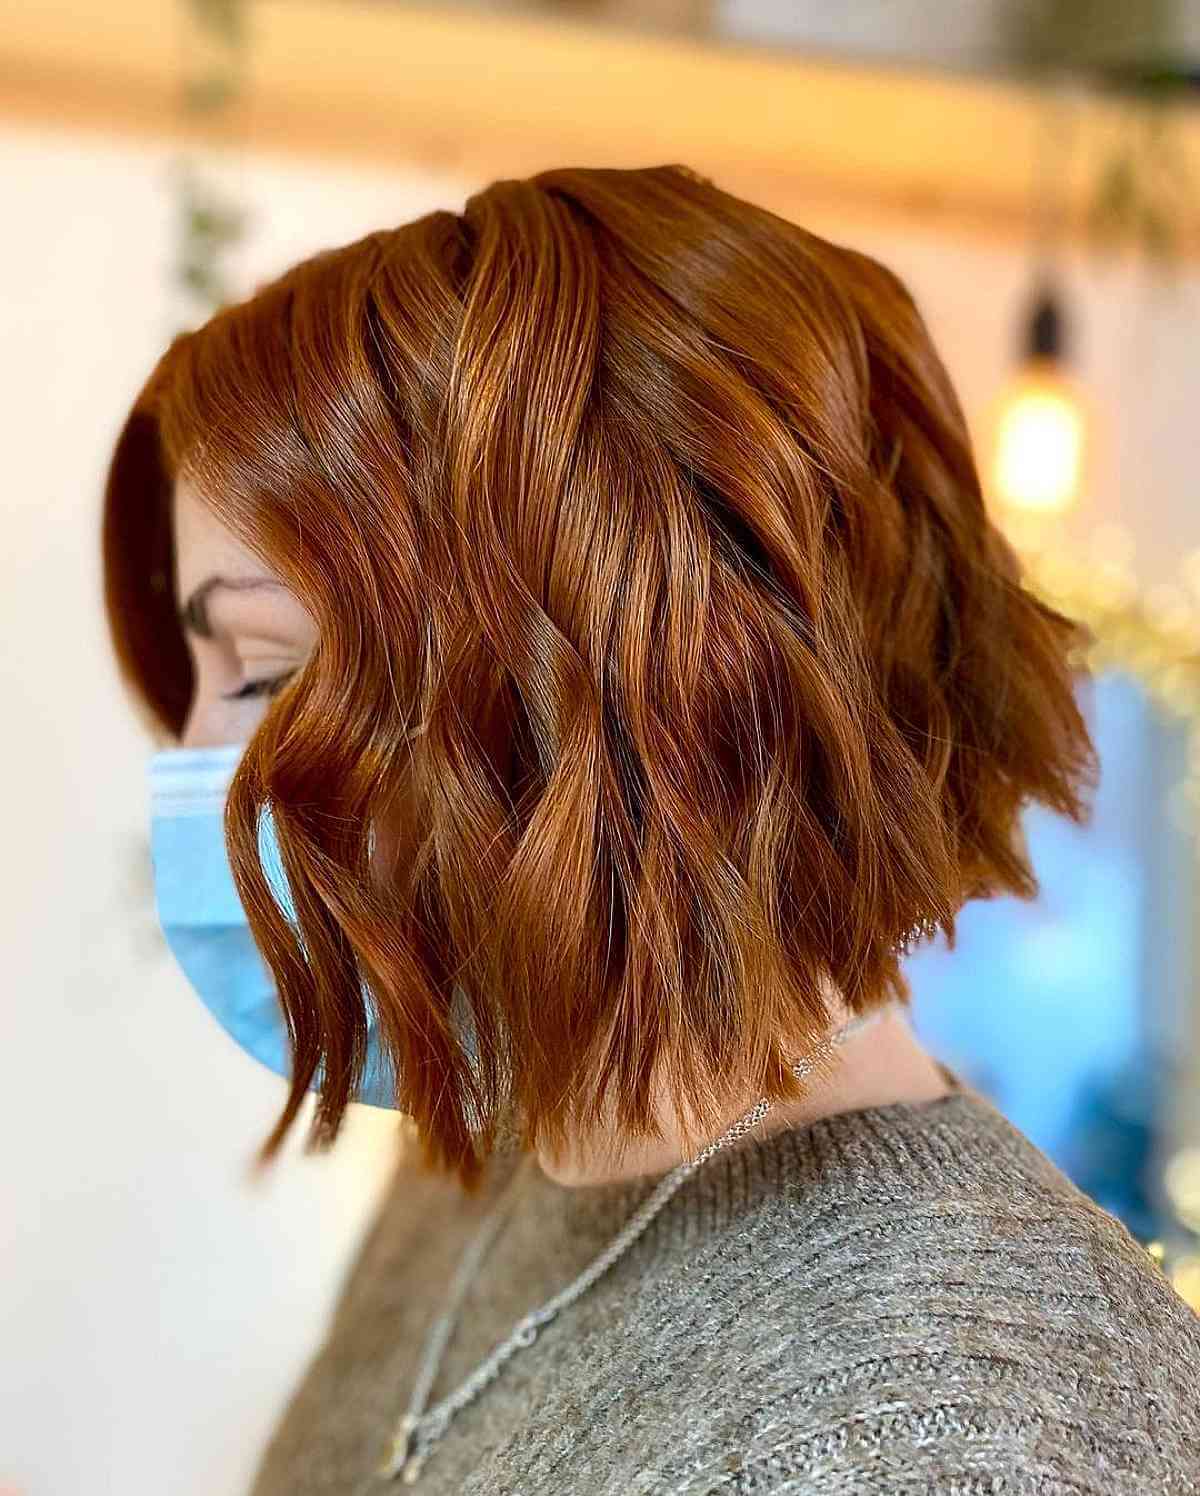 Natural Auburn Hair with Waves for Short Hair